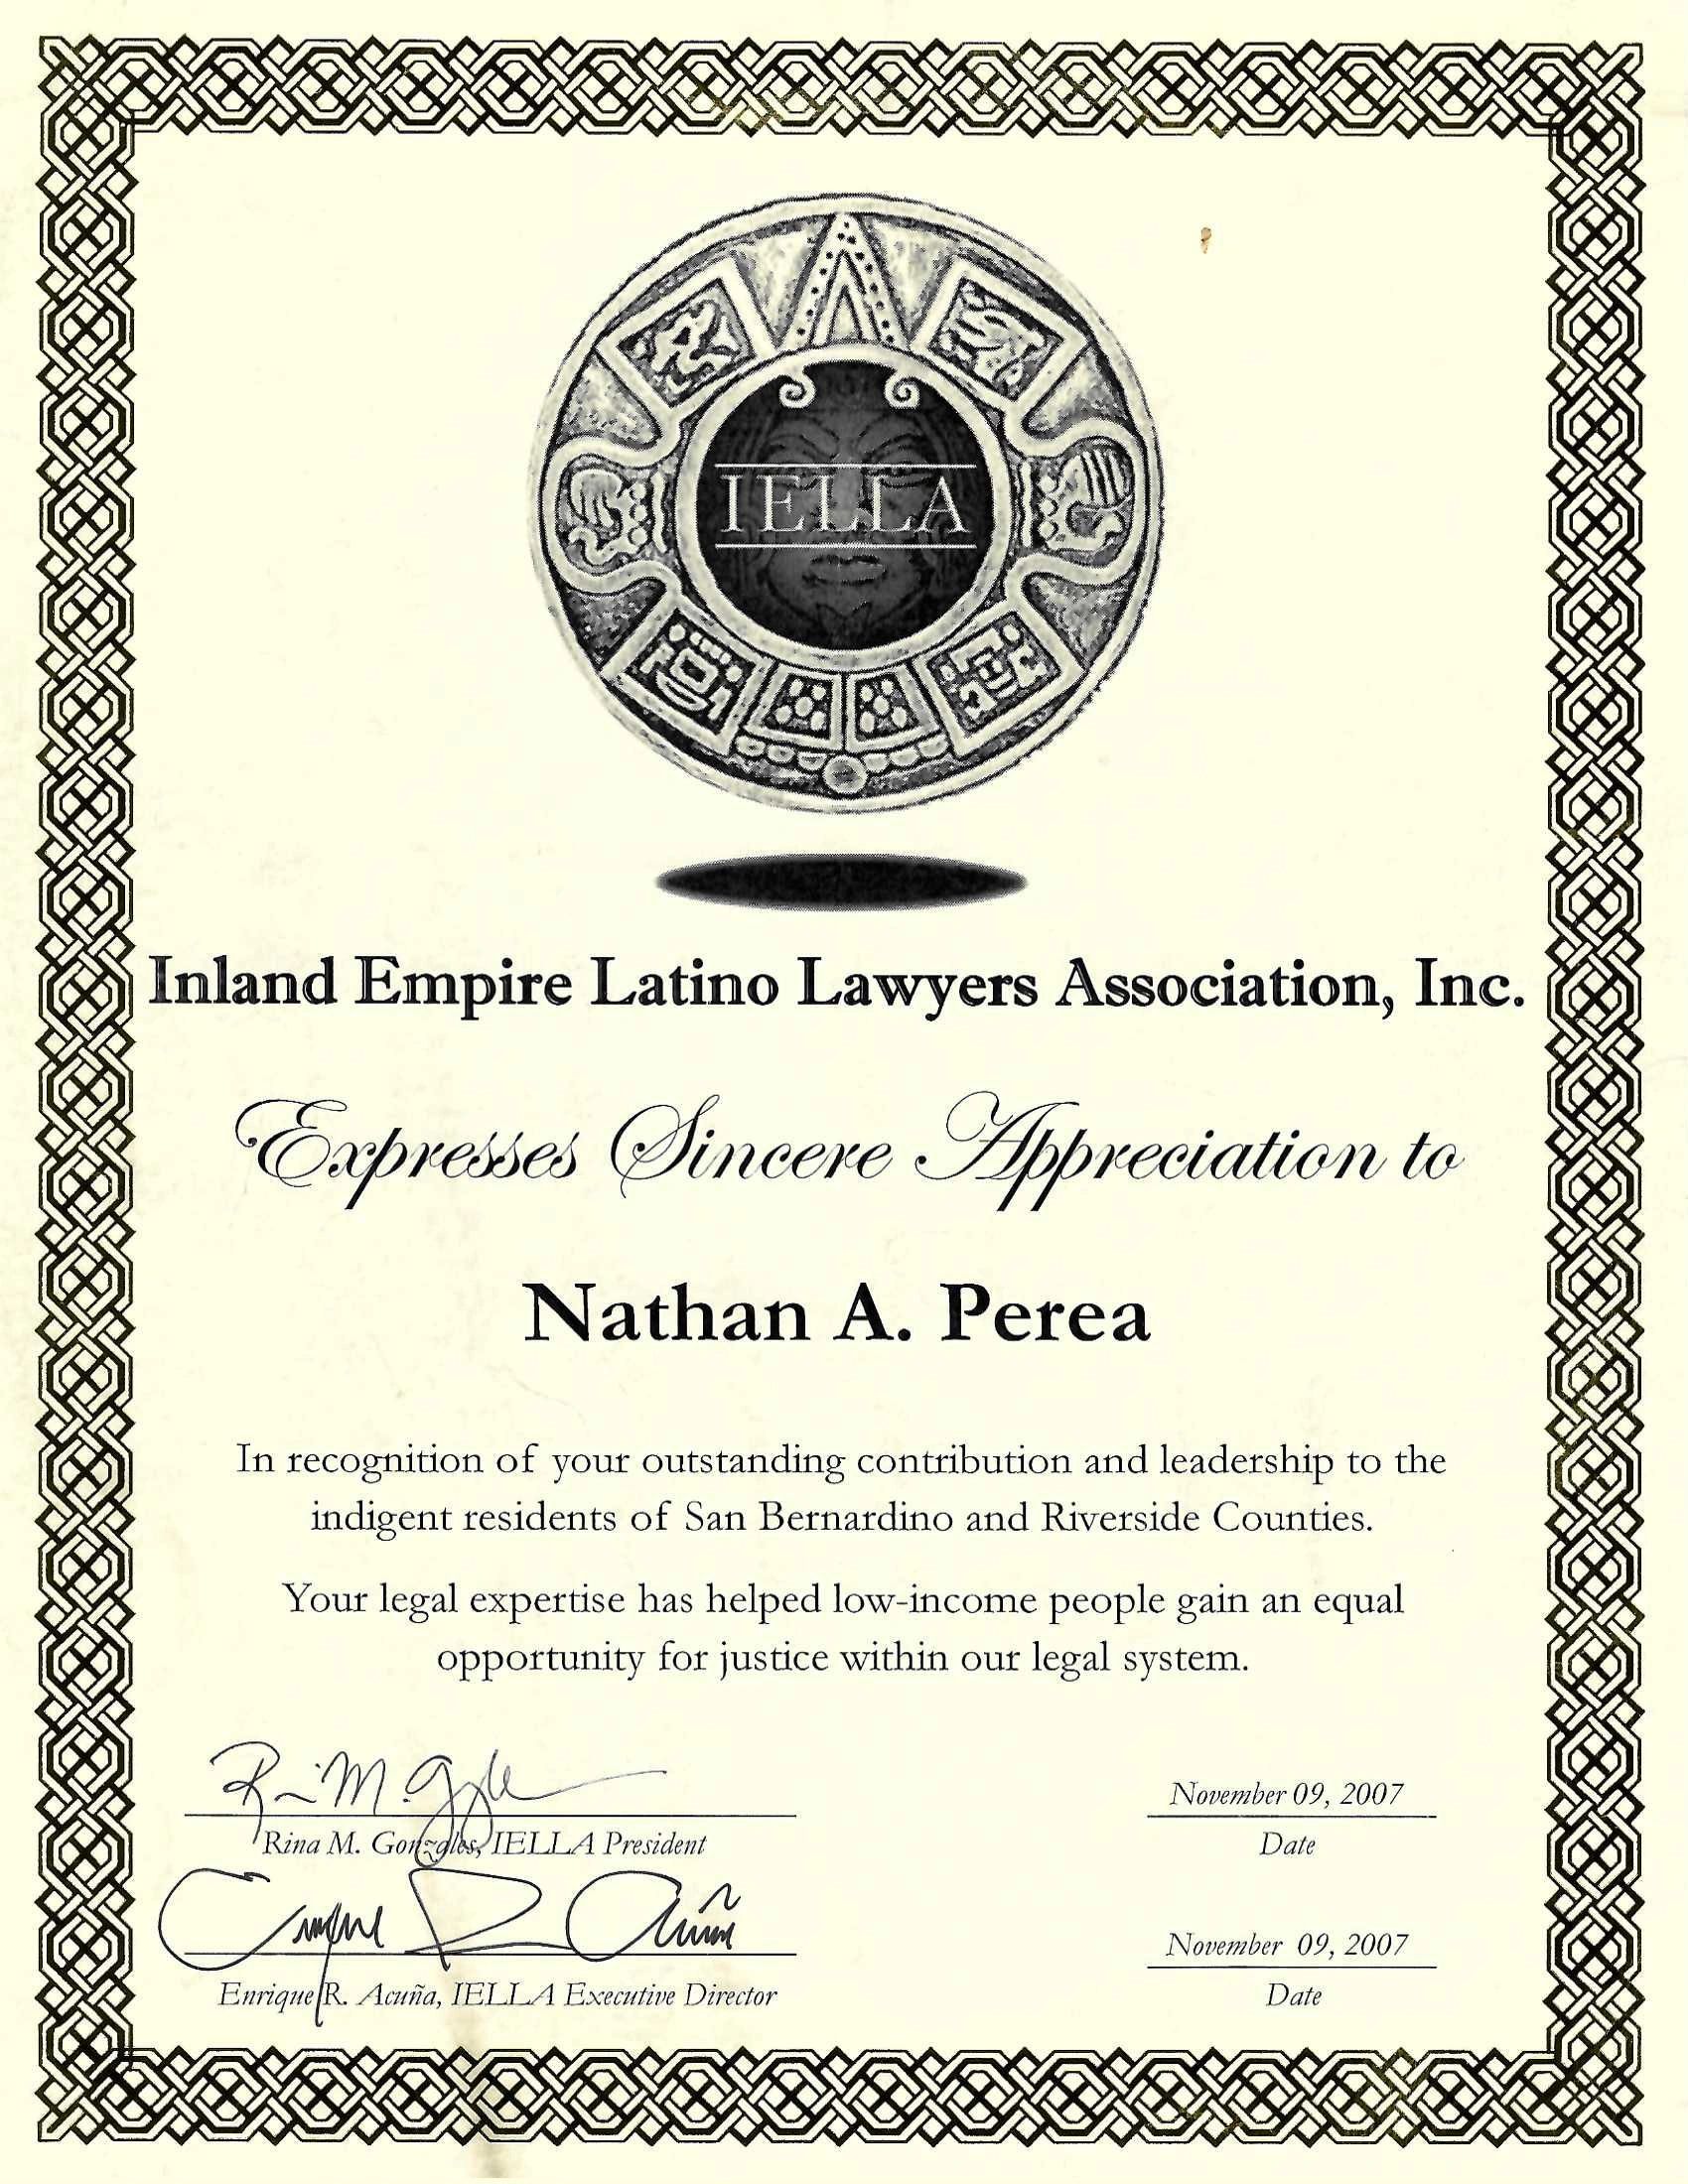 Inland Empire Latino Lawyers Association, Inc., IELLA Certificate of Appreciation